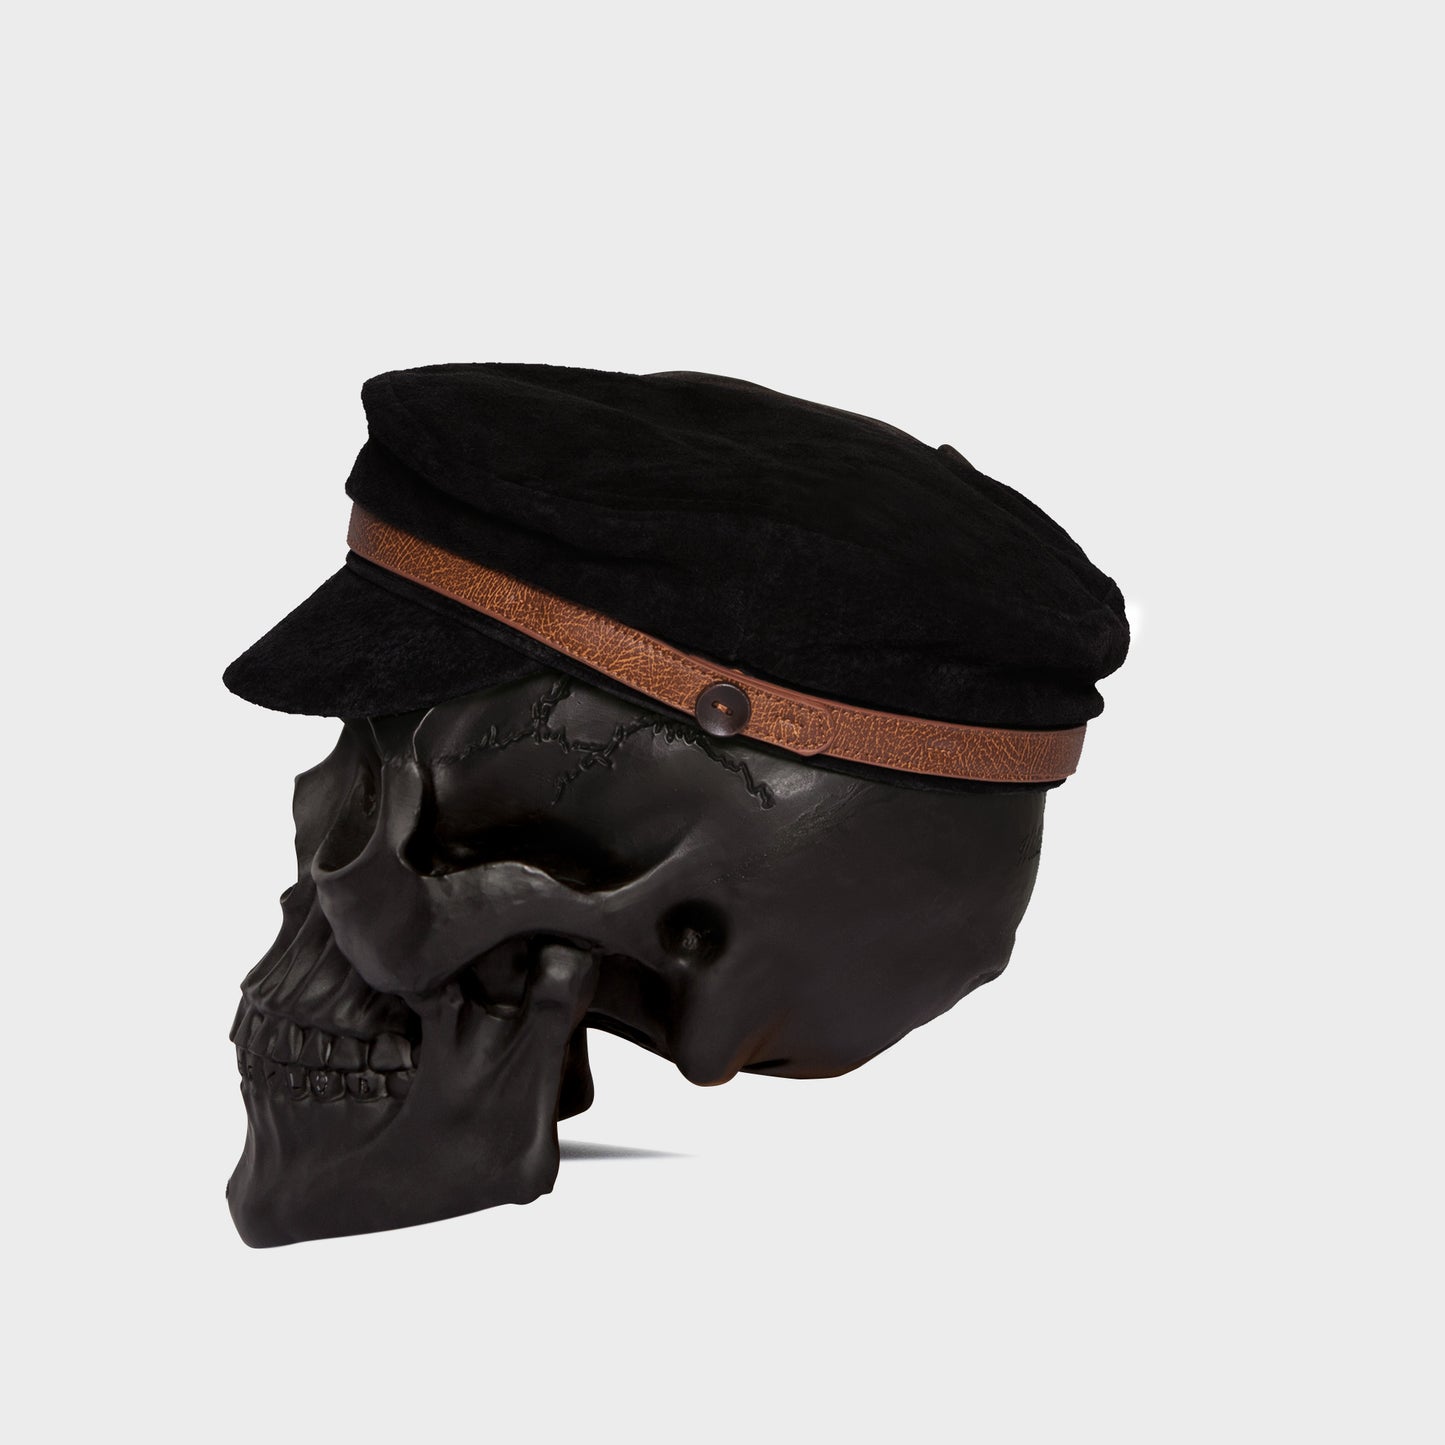 The Skipper Hat